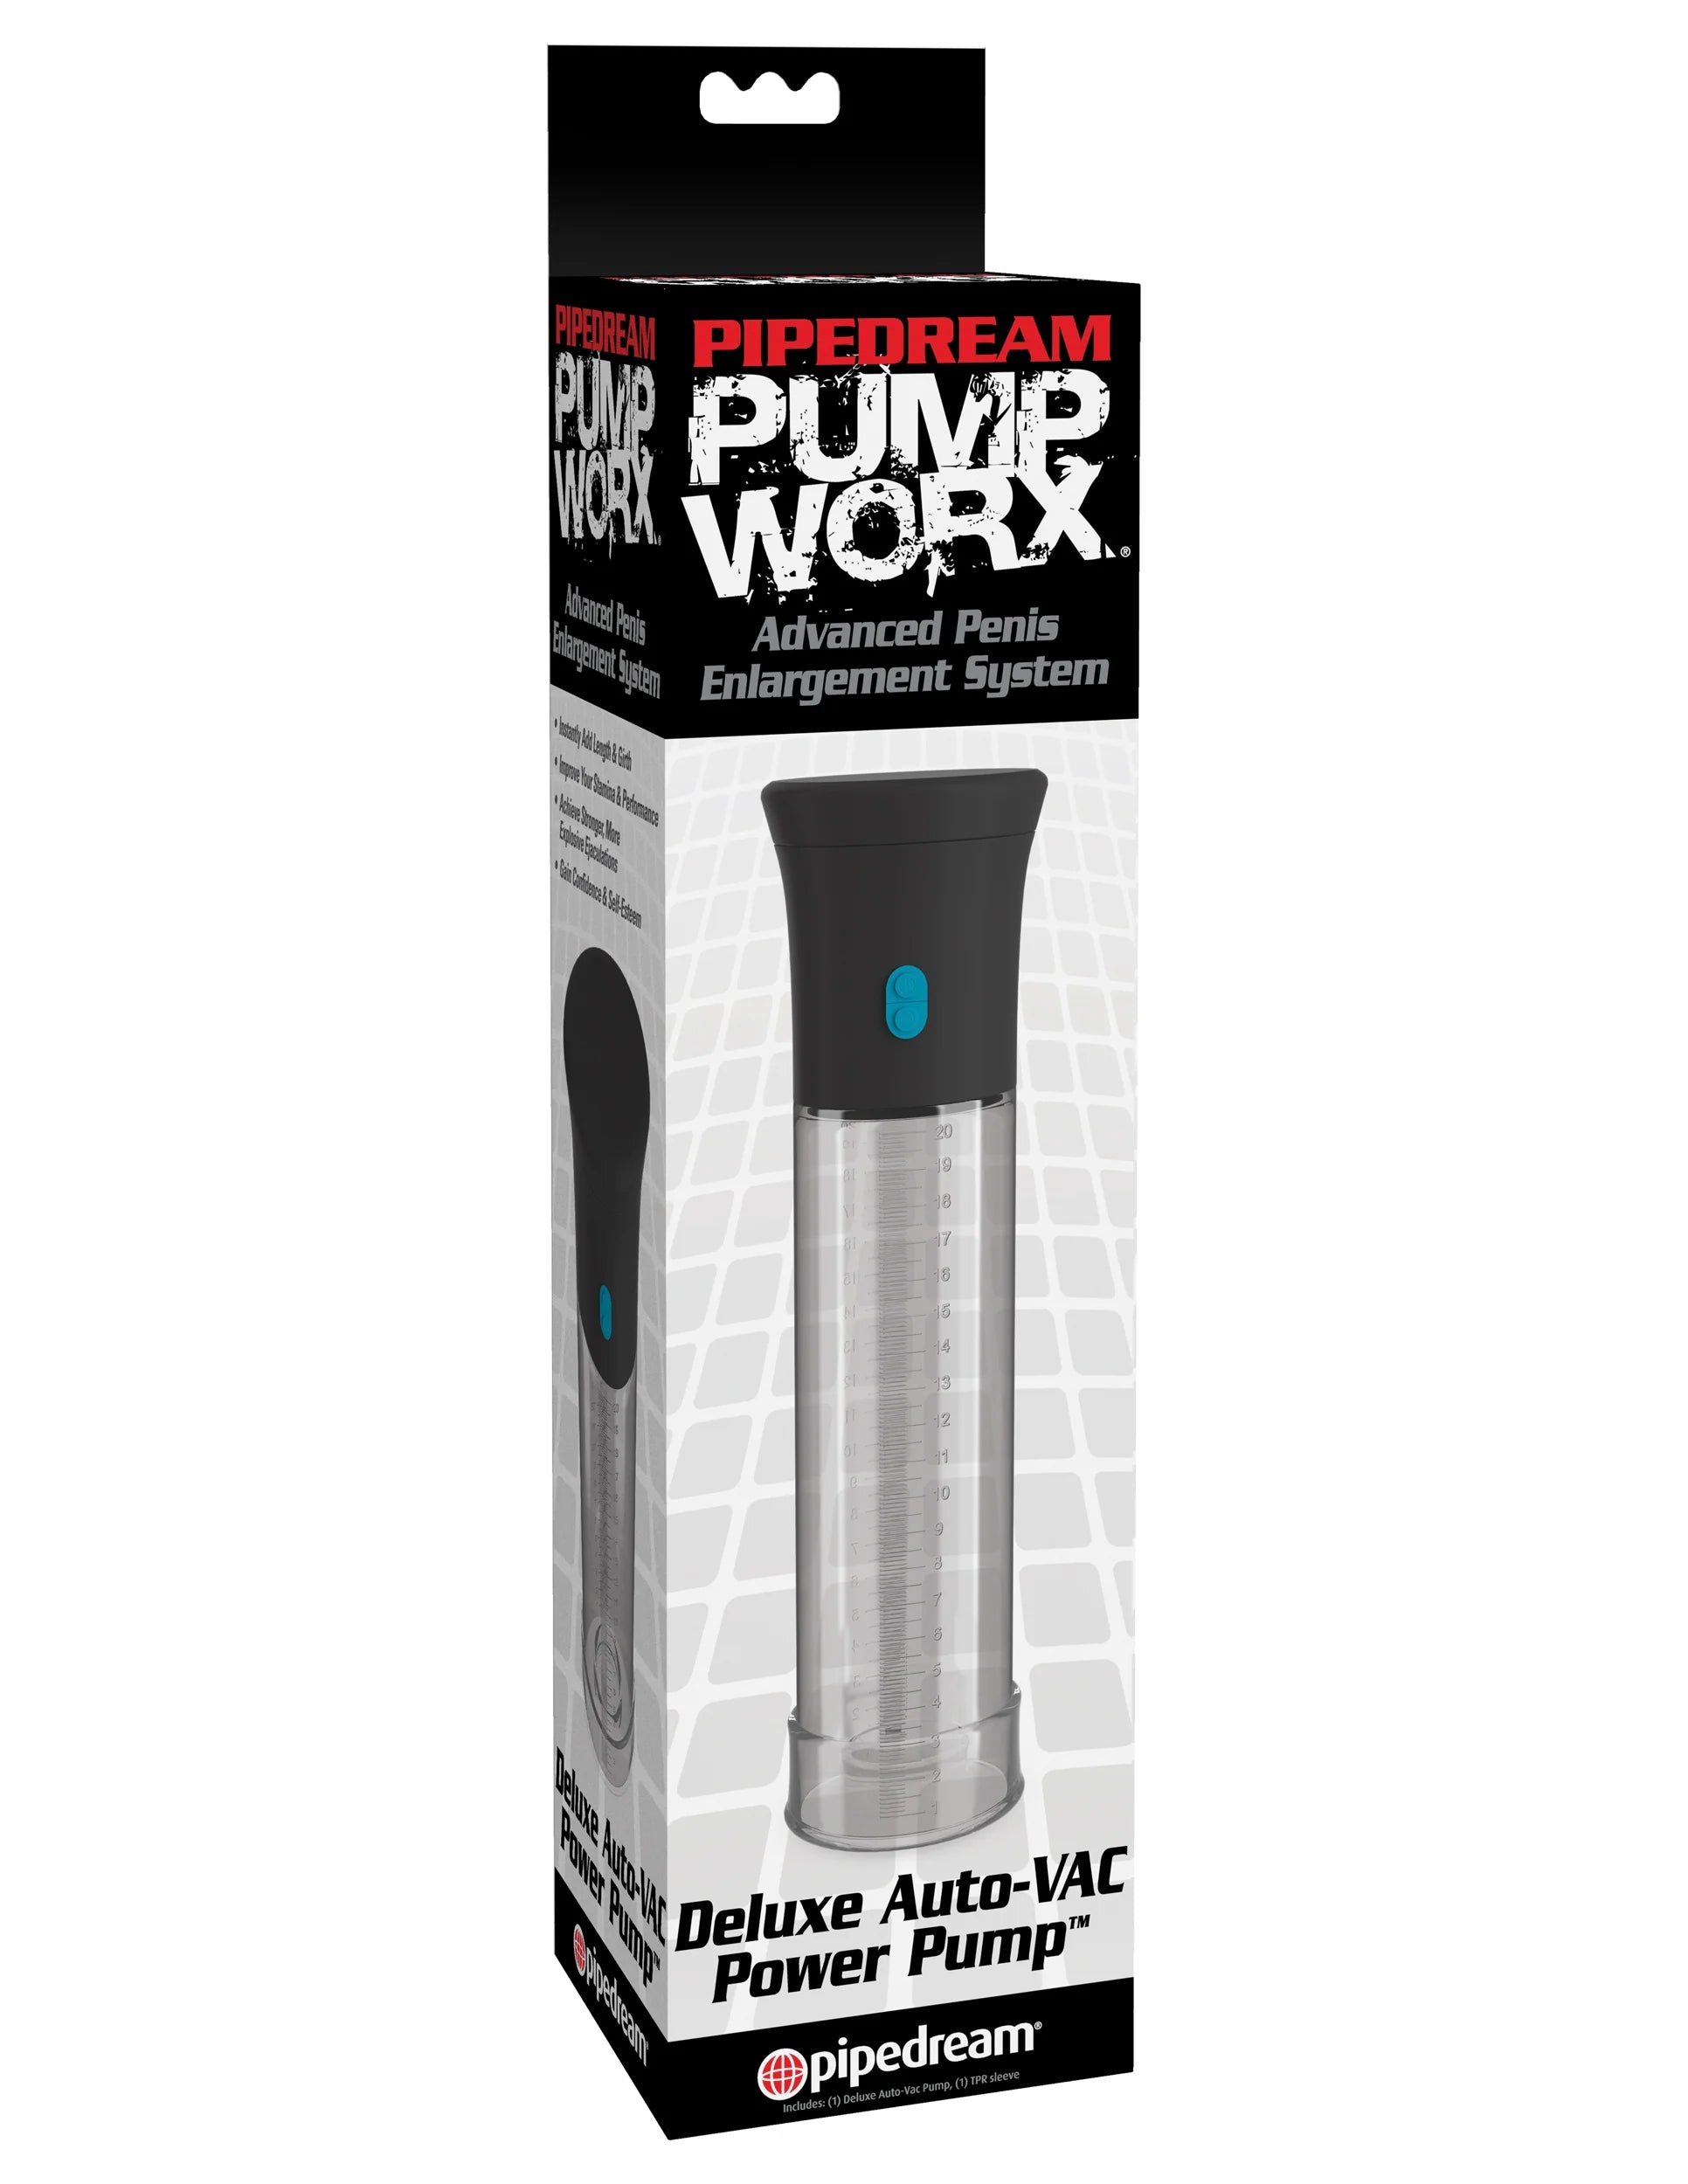 Pump Worx Deluxe Auto-Vac Power Pump Advanced Penis Enlargement System